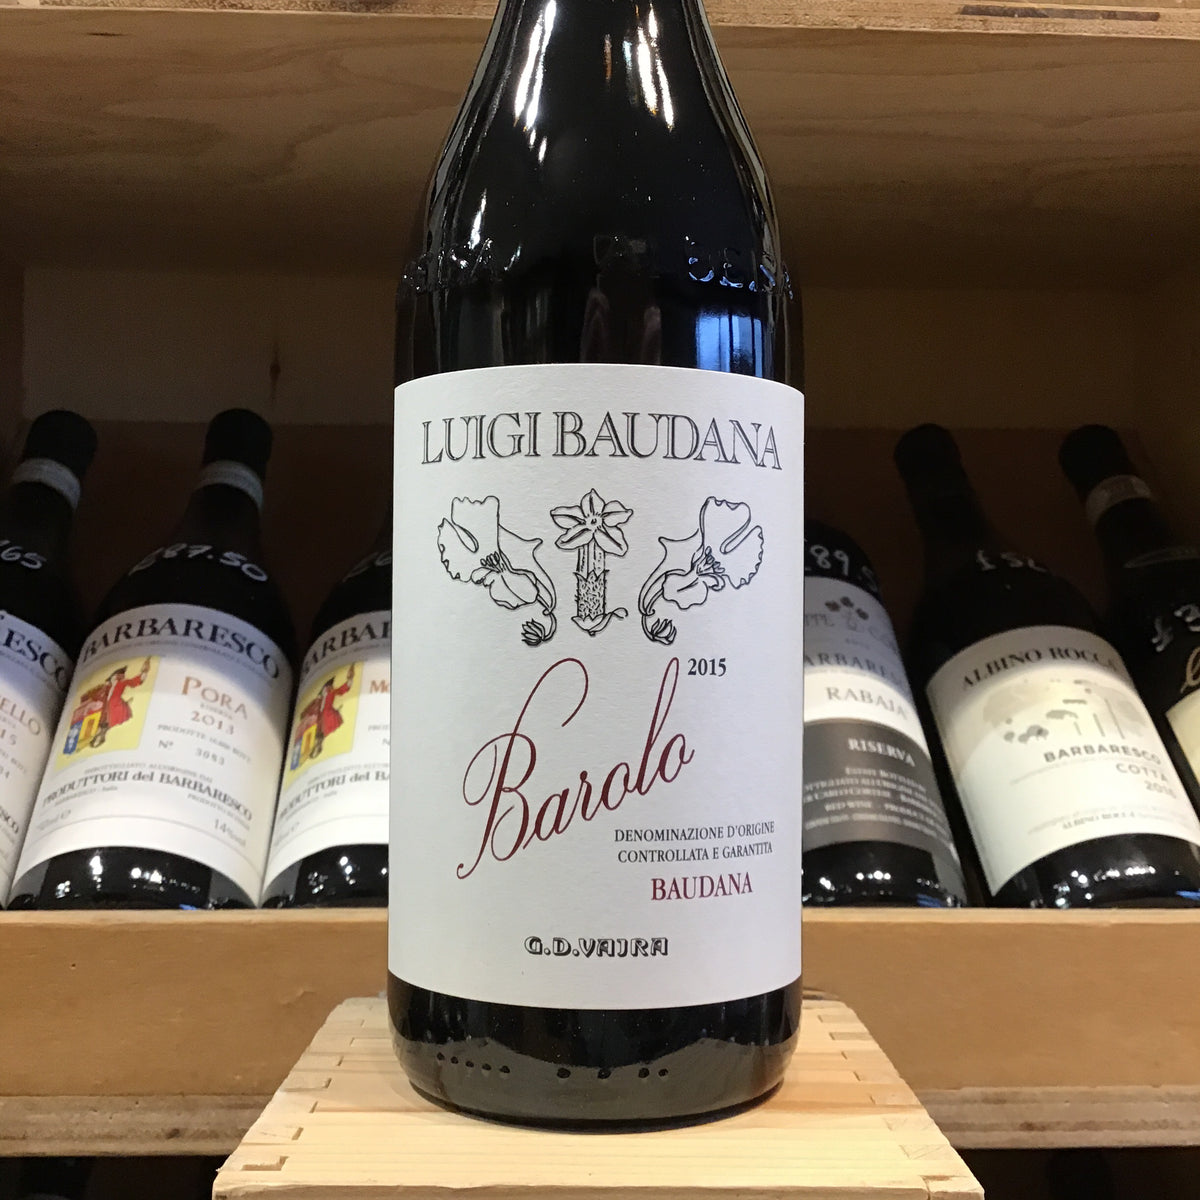 Barolo Baudana Luigi Baudana 2015 - Butlers Wine Cellar Brighton